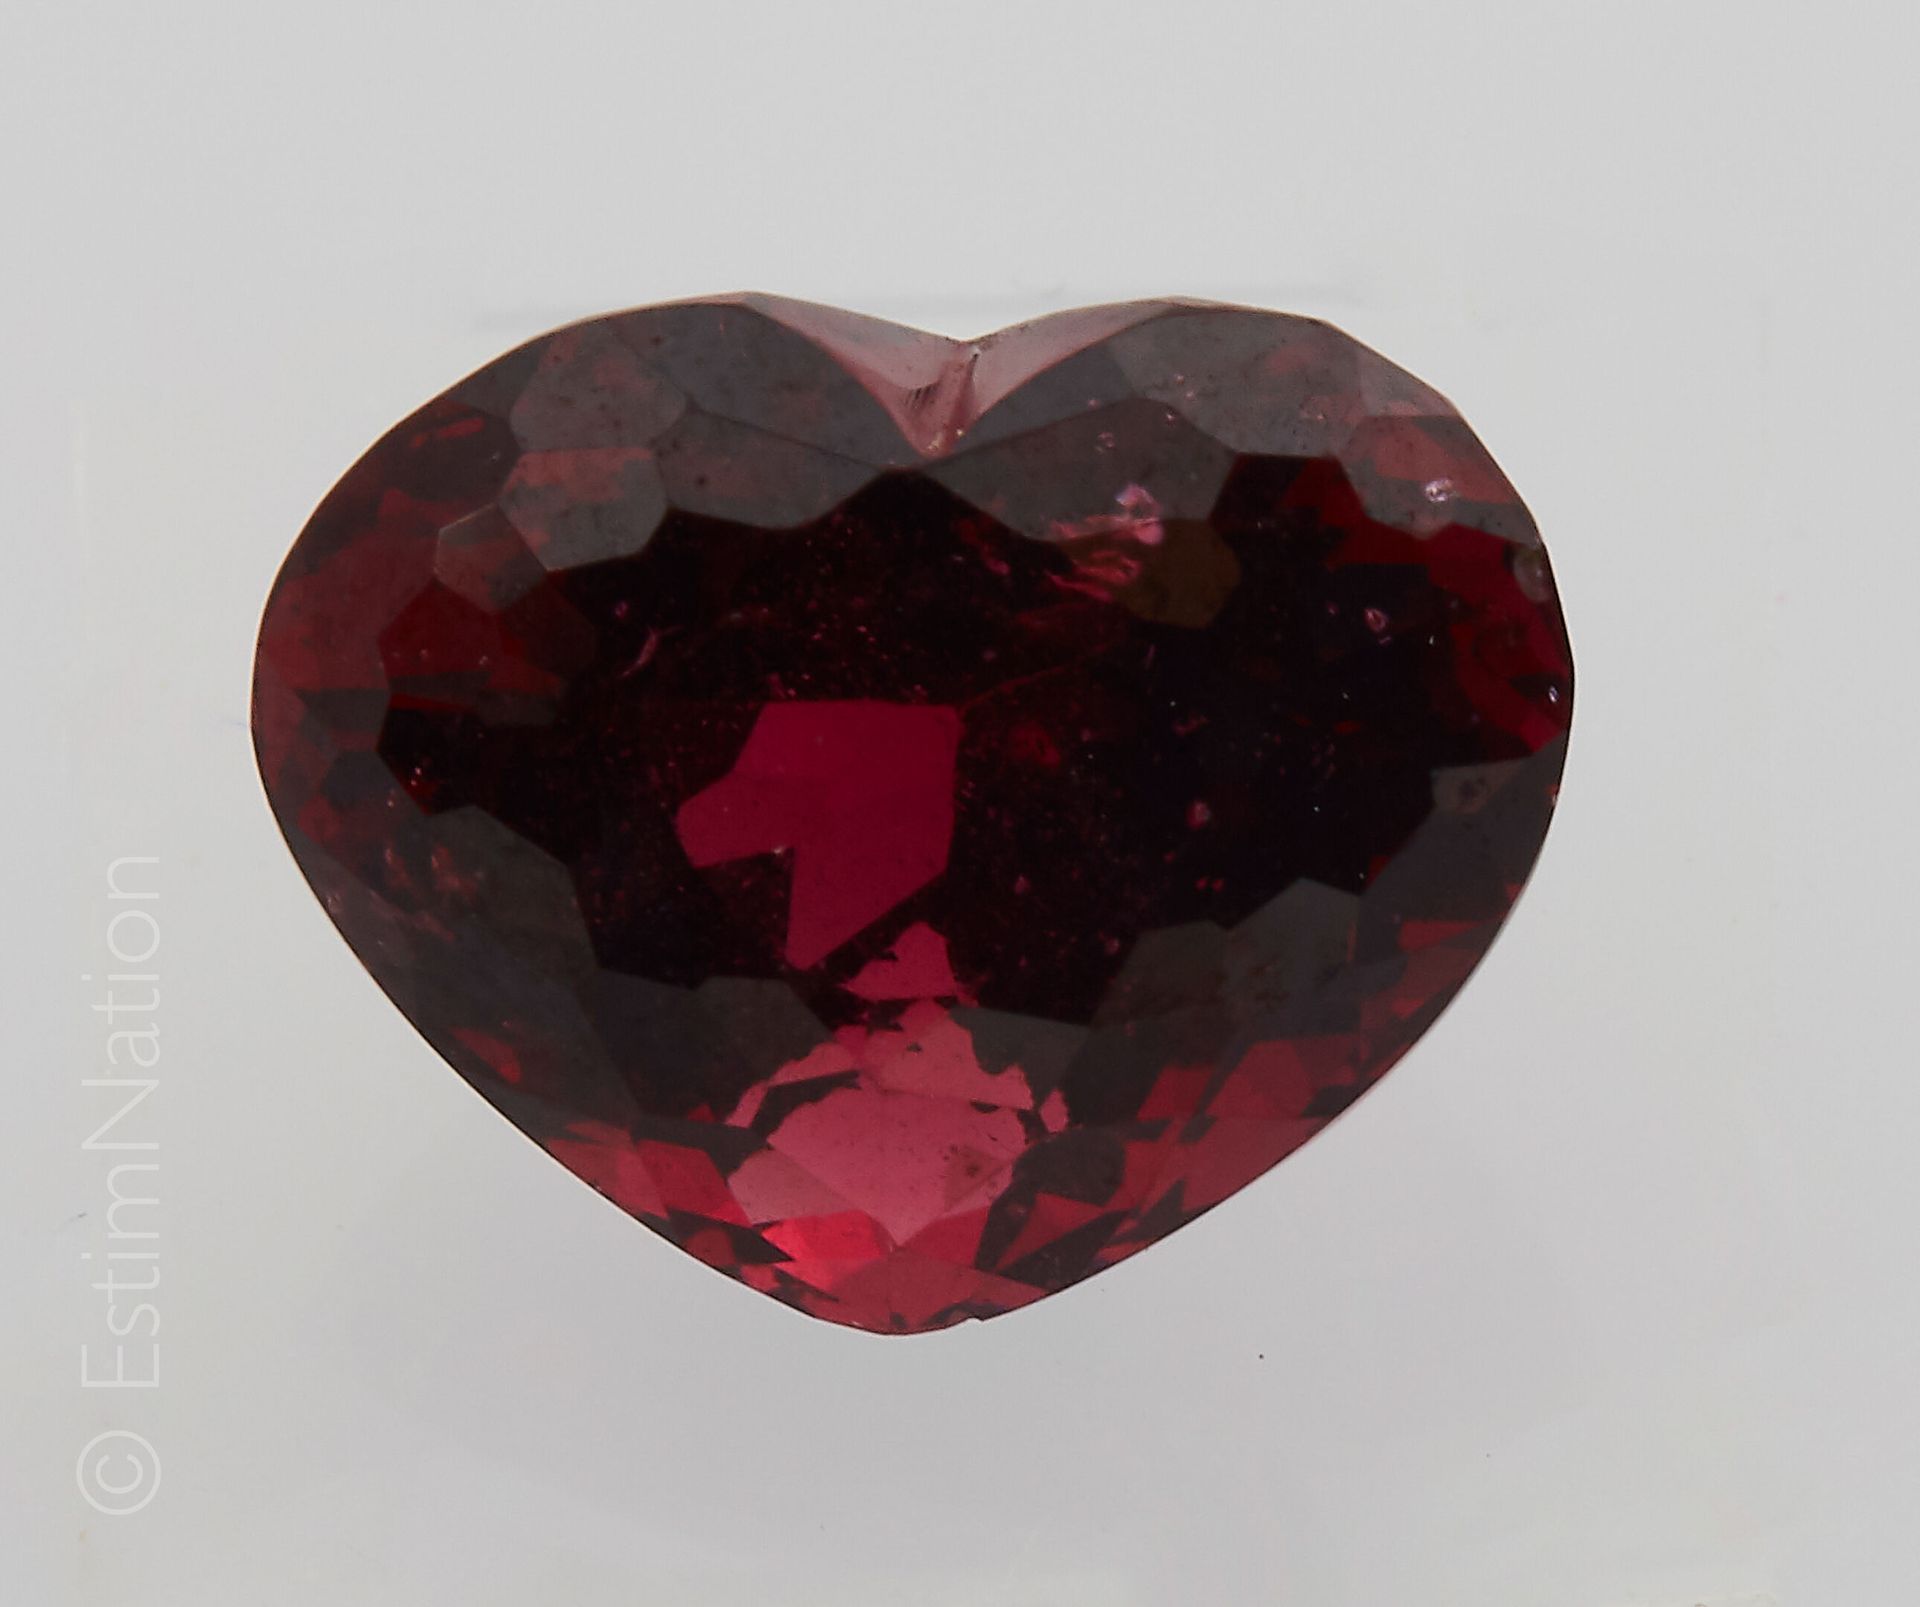 GRENAT Heart-shaped rhodolite garnet weighing 3.24 ct